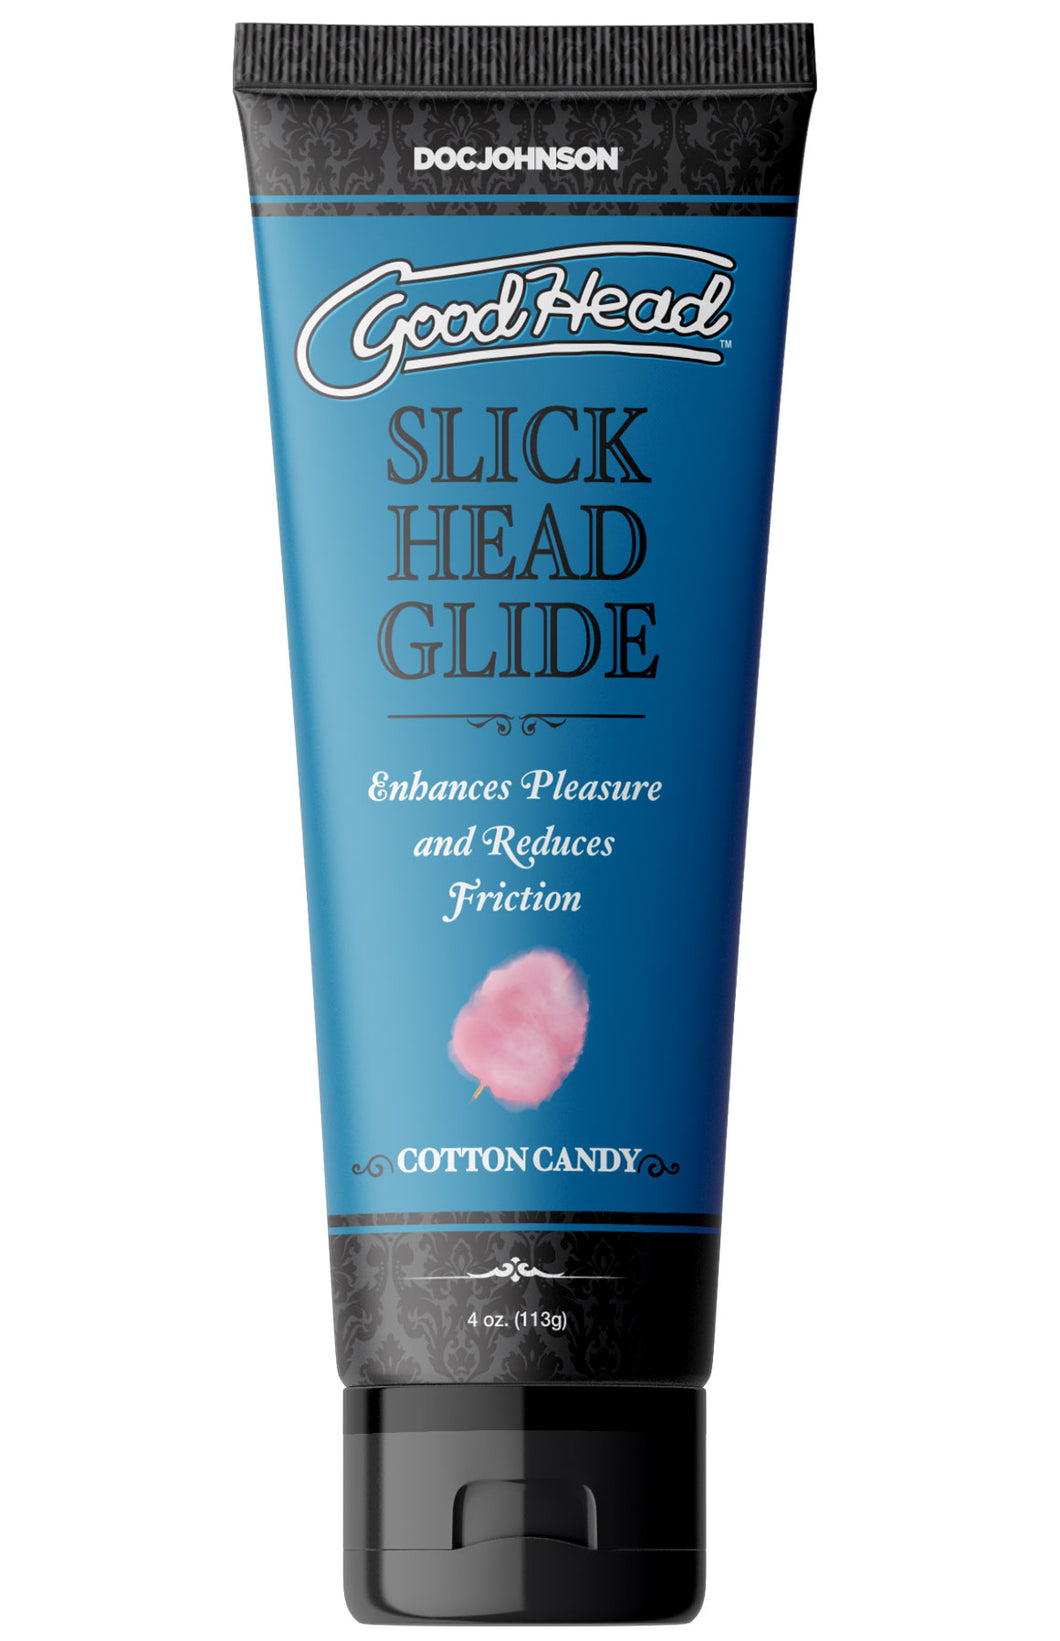 Goodhead - Slick Head Glide - Cotton Candy - 4 Oz.